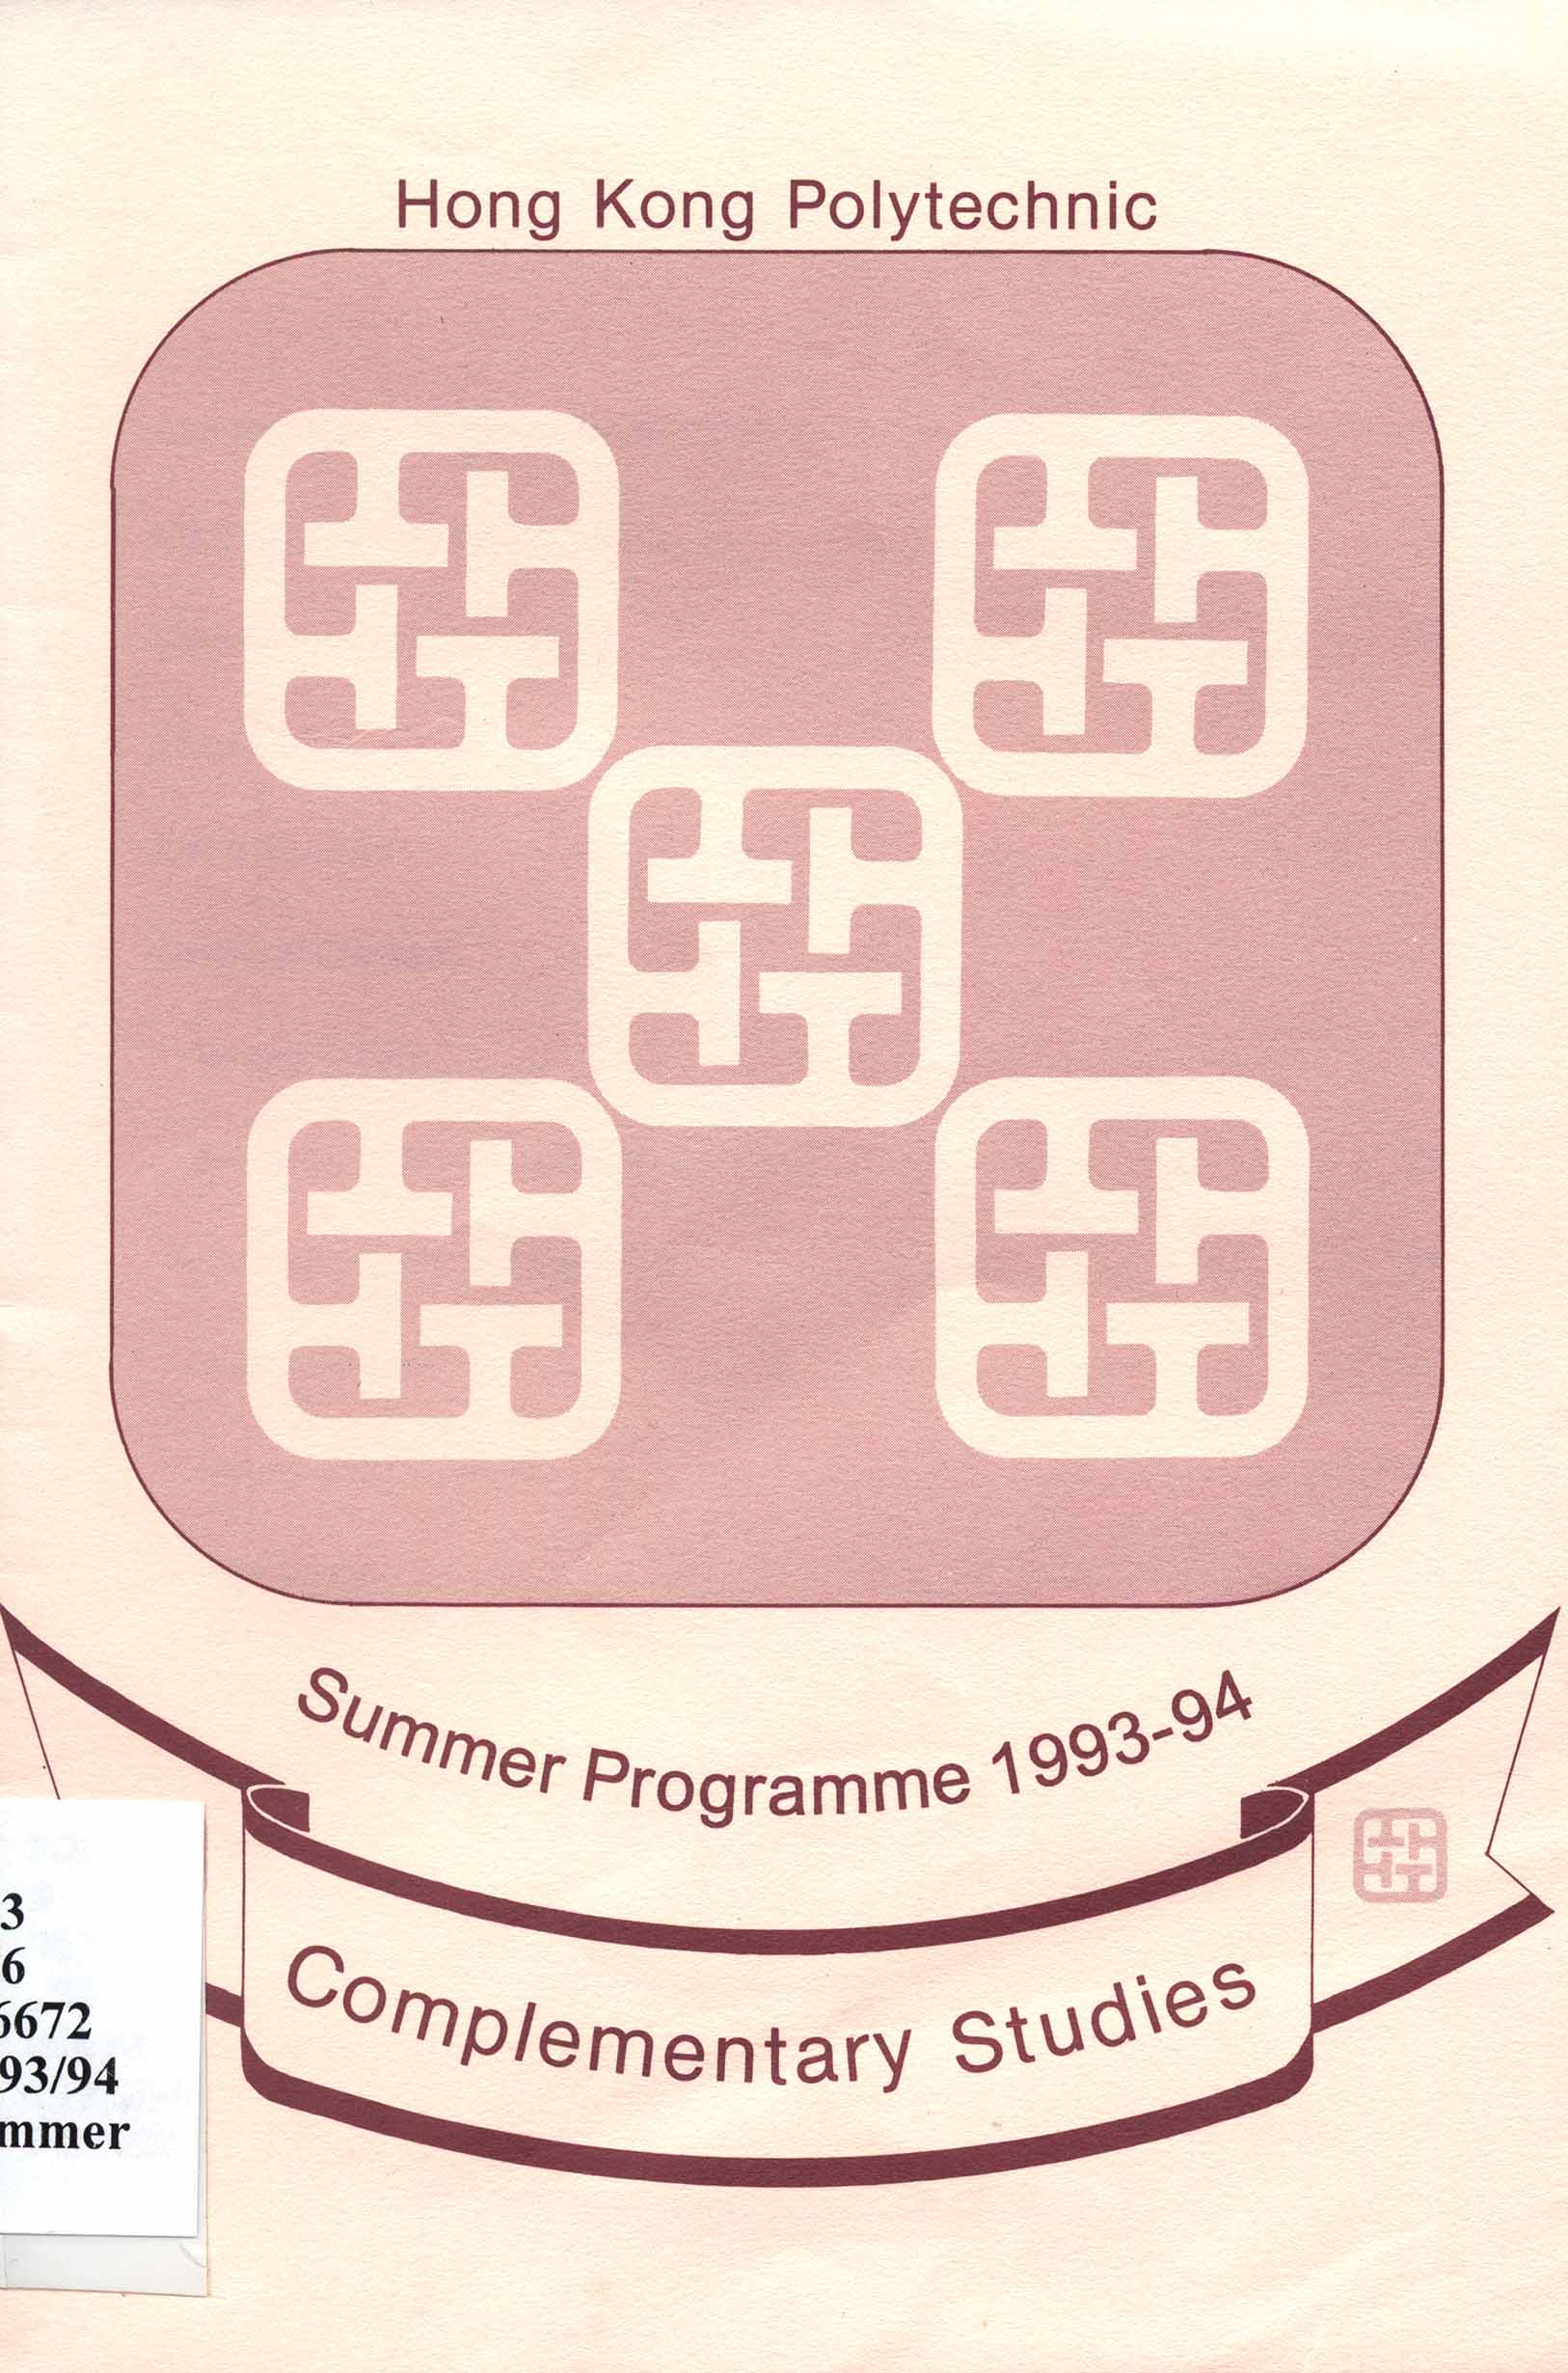 Complementary studies summer programme 1993-94